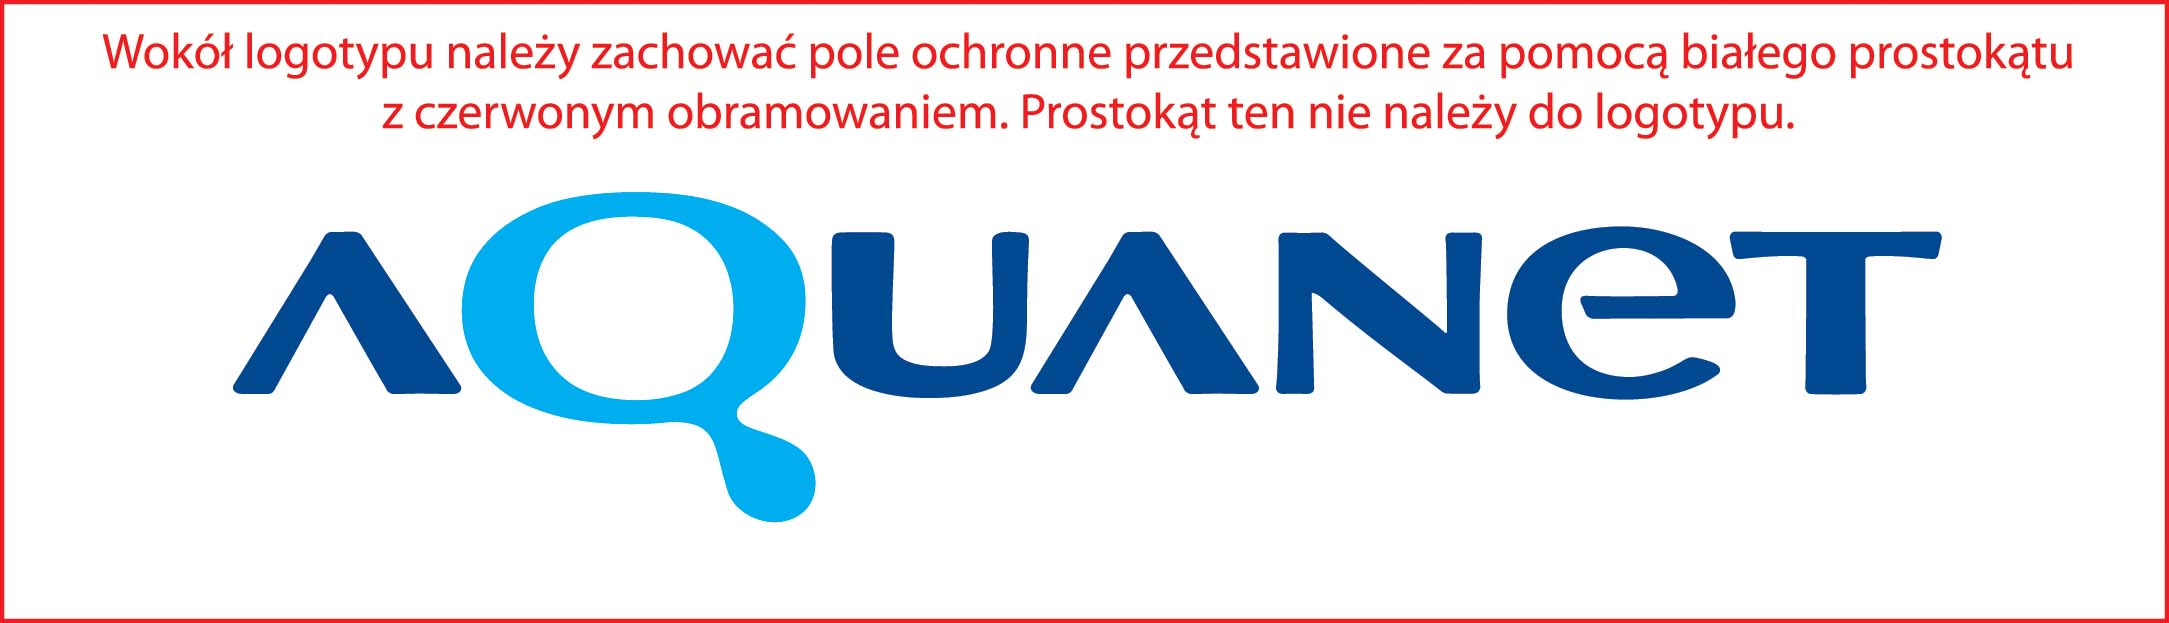 Aquanet Logo photo - 1